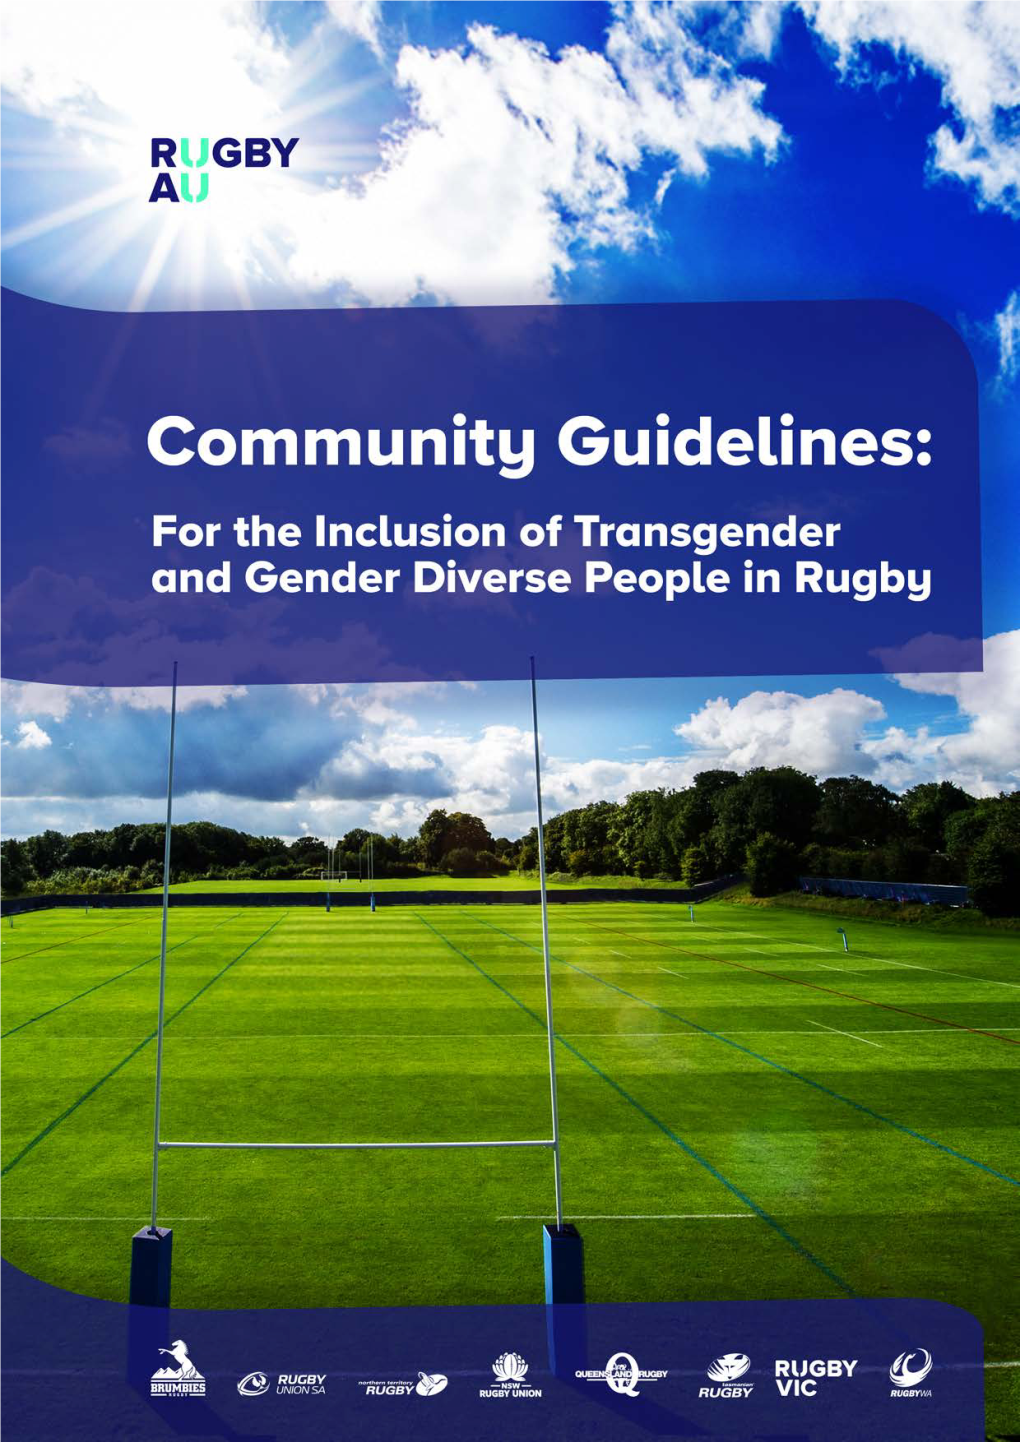 Transgender and Gender Diverse People in Rugby